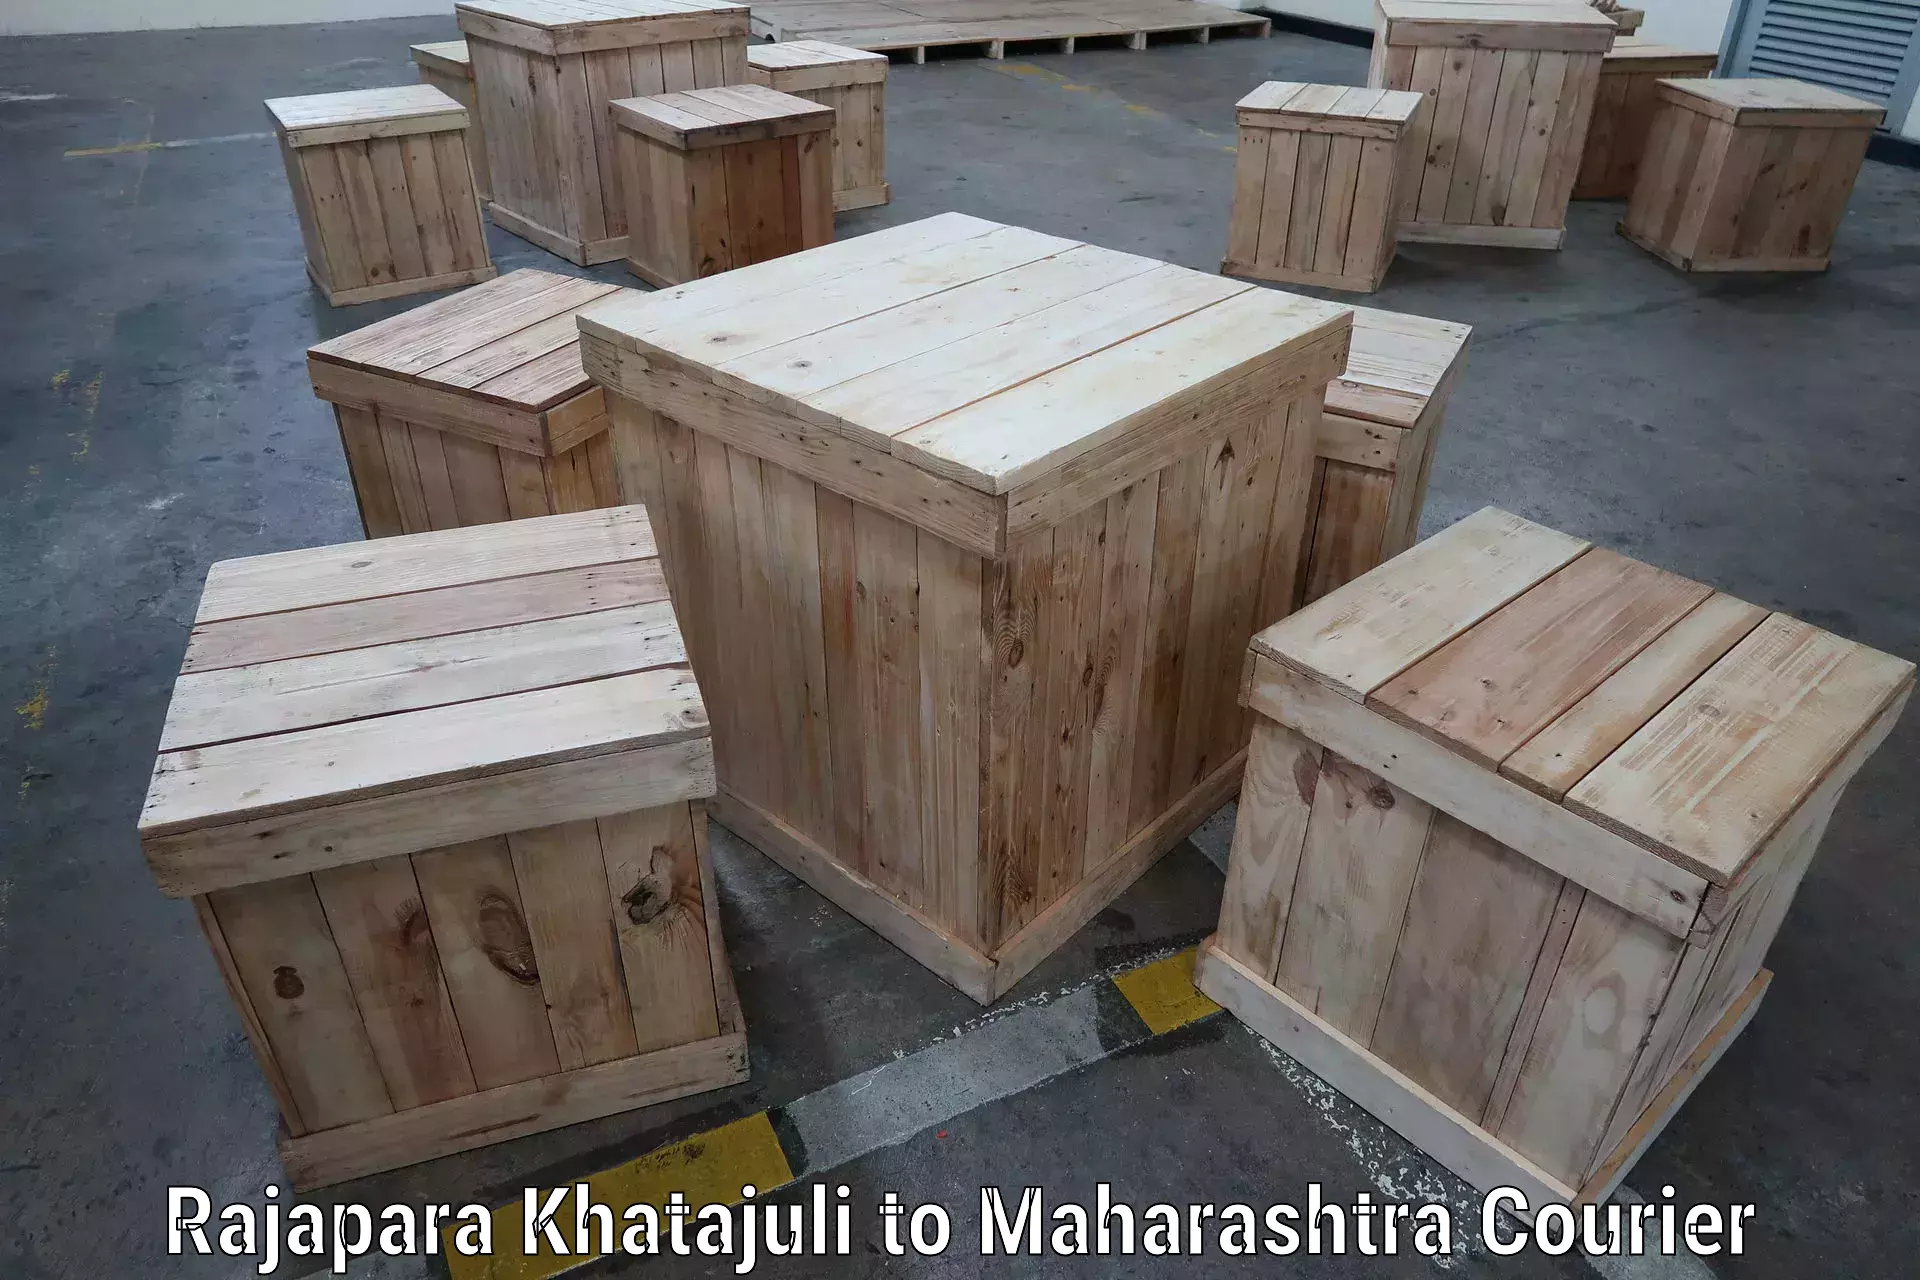 Bulk courier orders Rajapara Khatajuli to Maharashtra